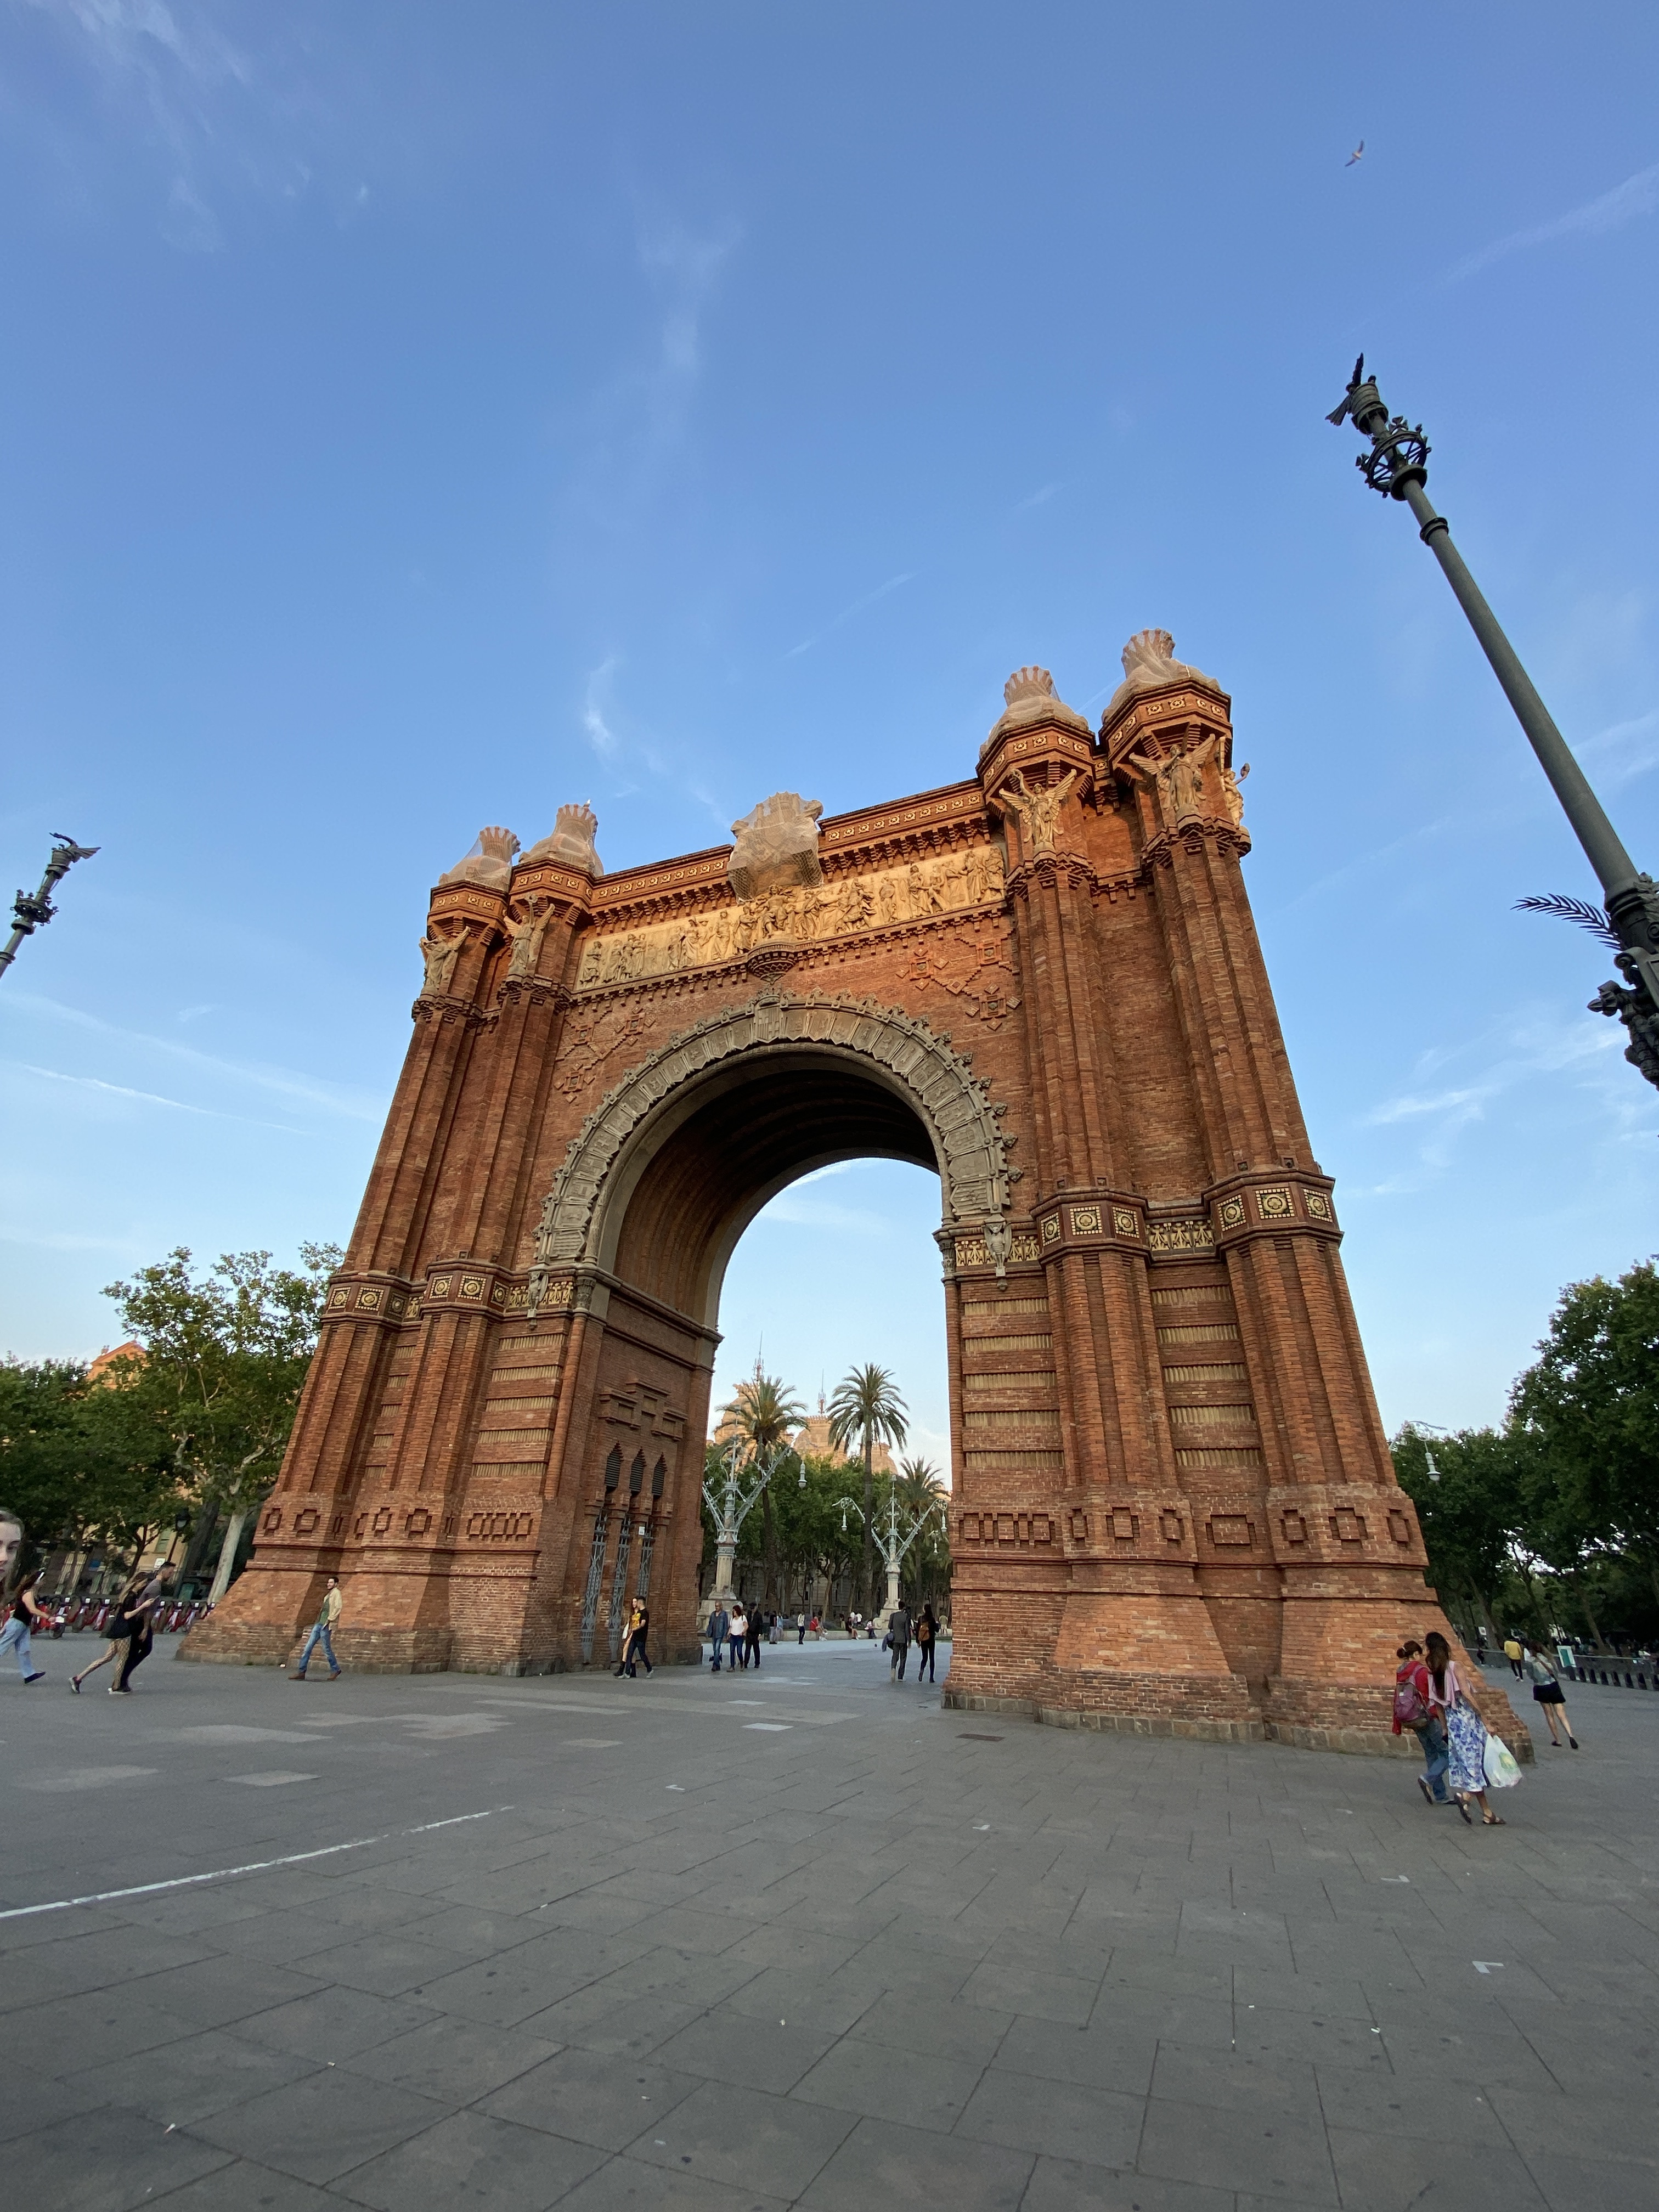 The Arc de Triomf in Barcelona, Spain